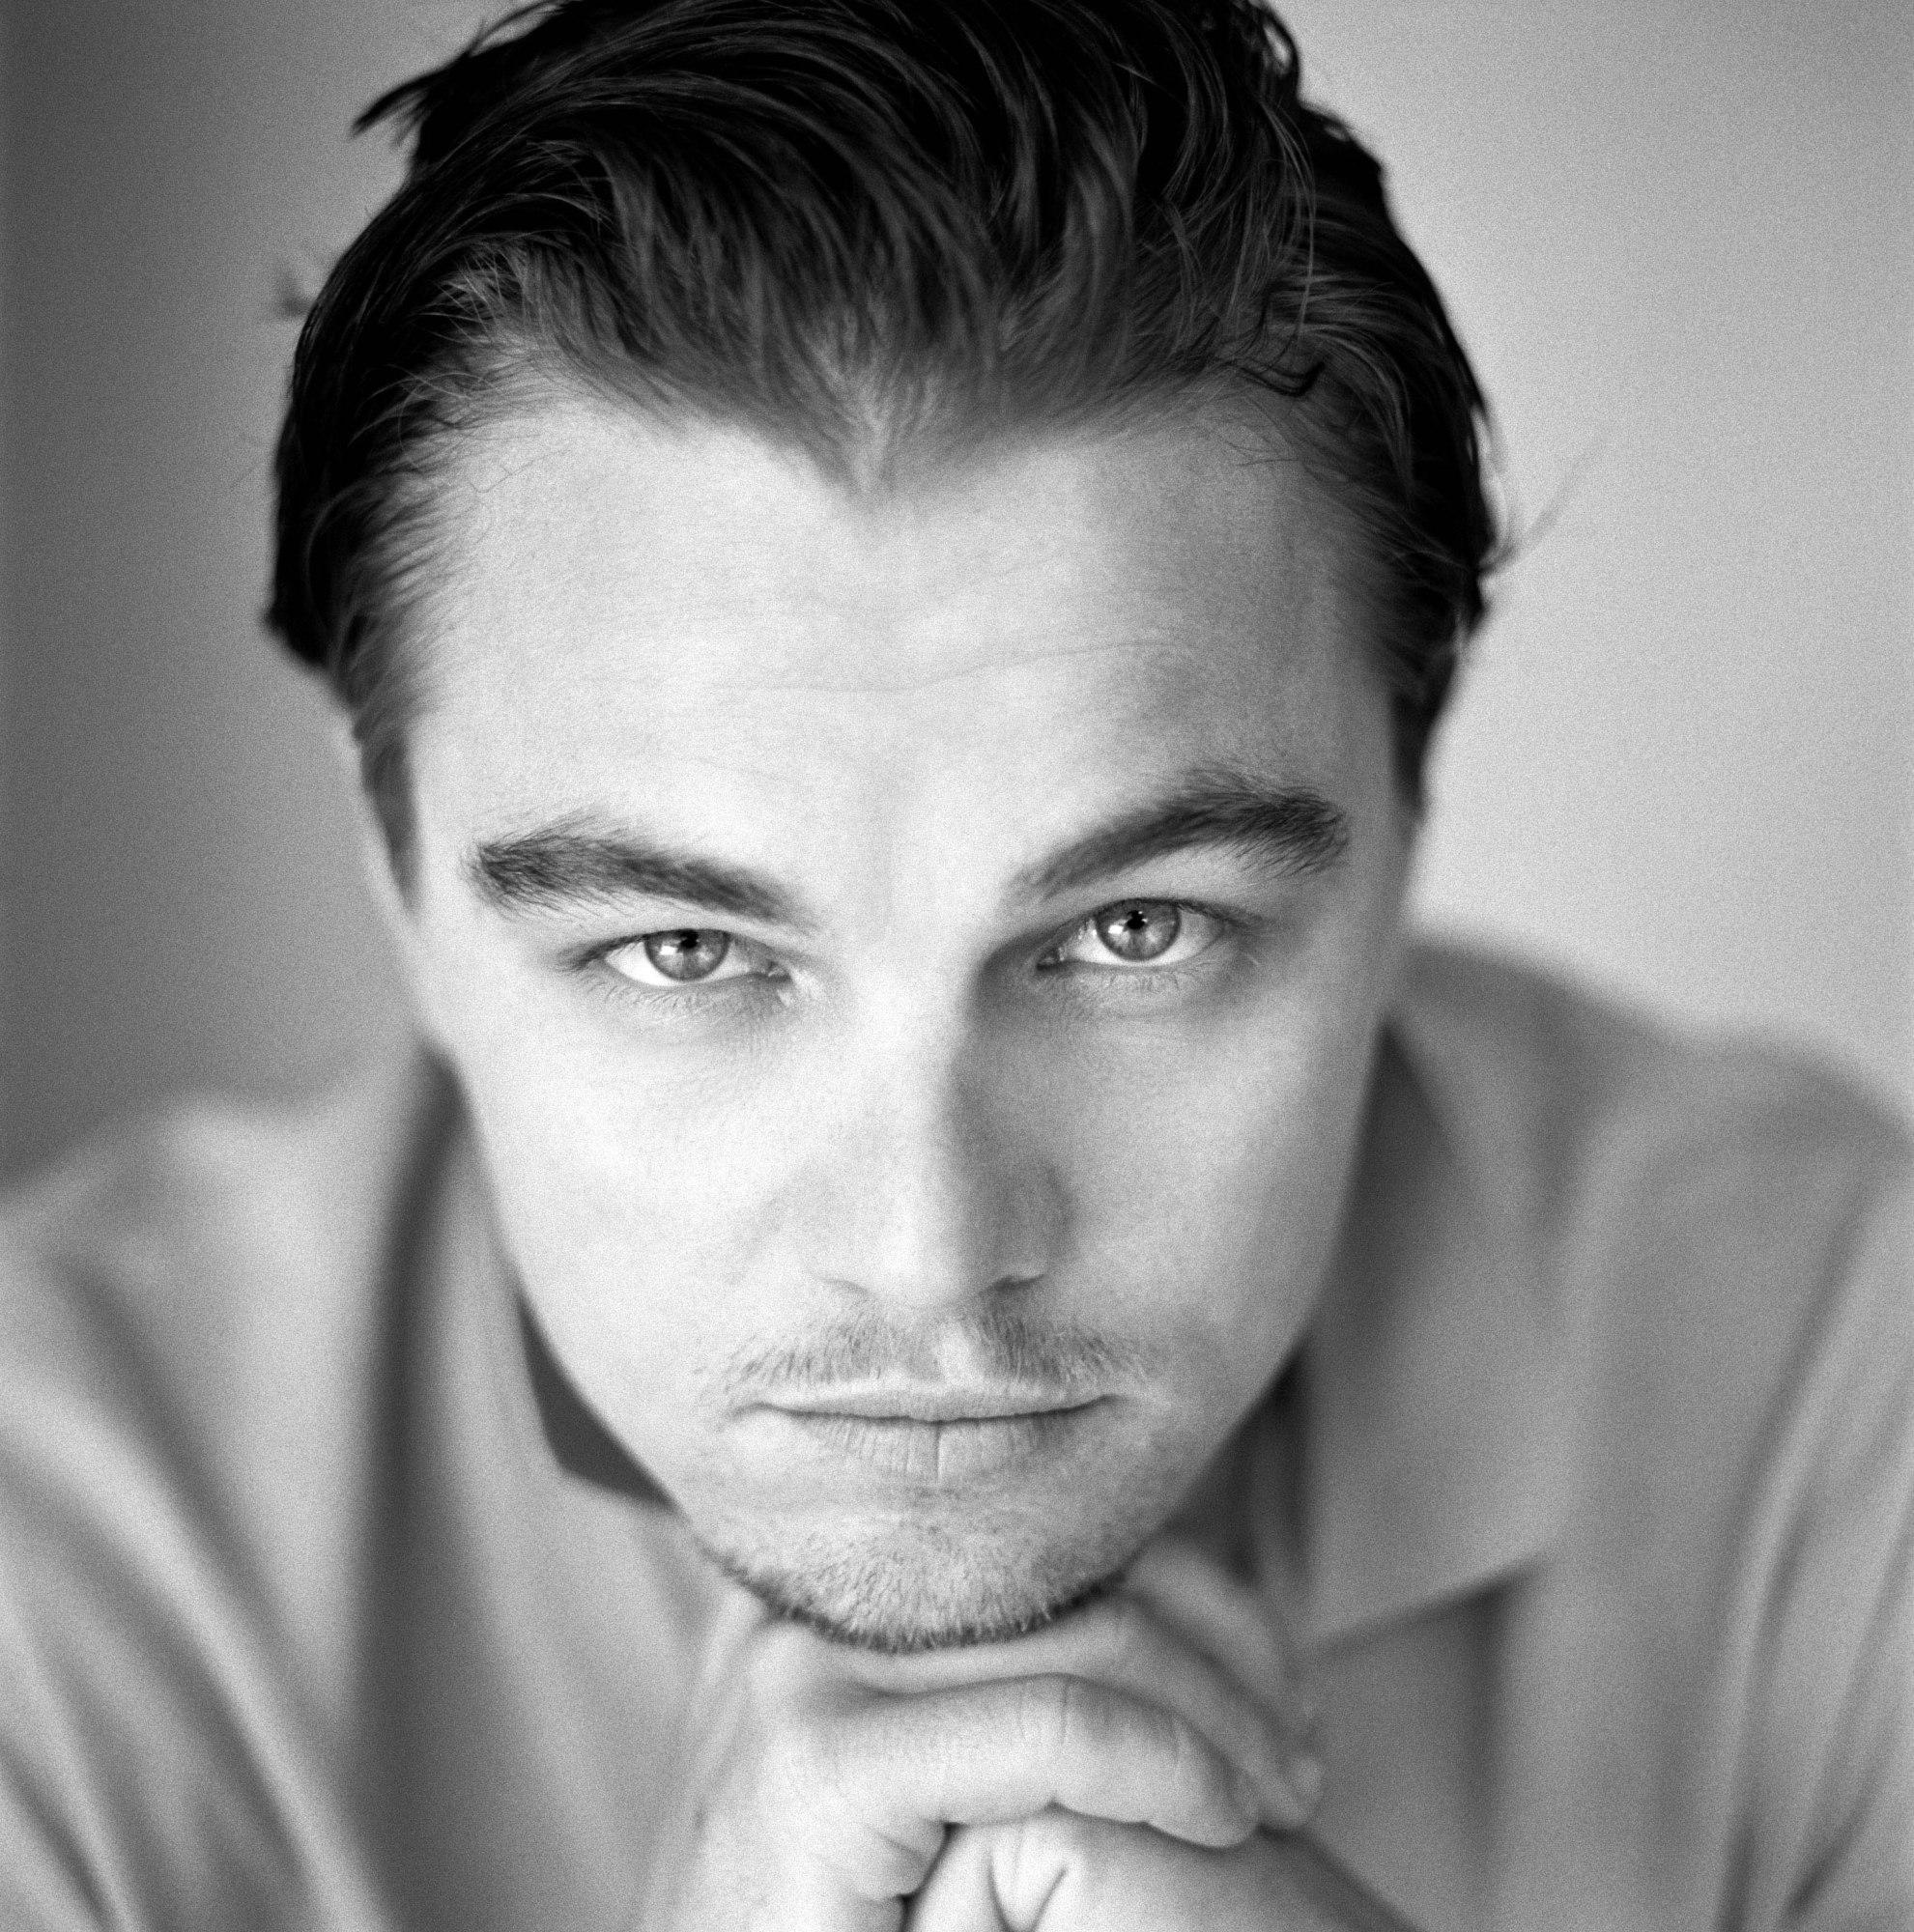 Leonardo DiCaprio photo 151 of 1169 pics, wallpaper - photo #273604 ...